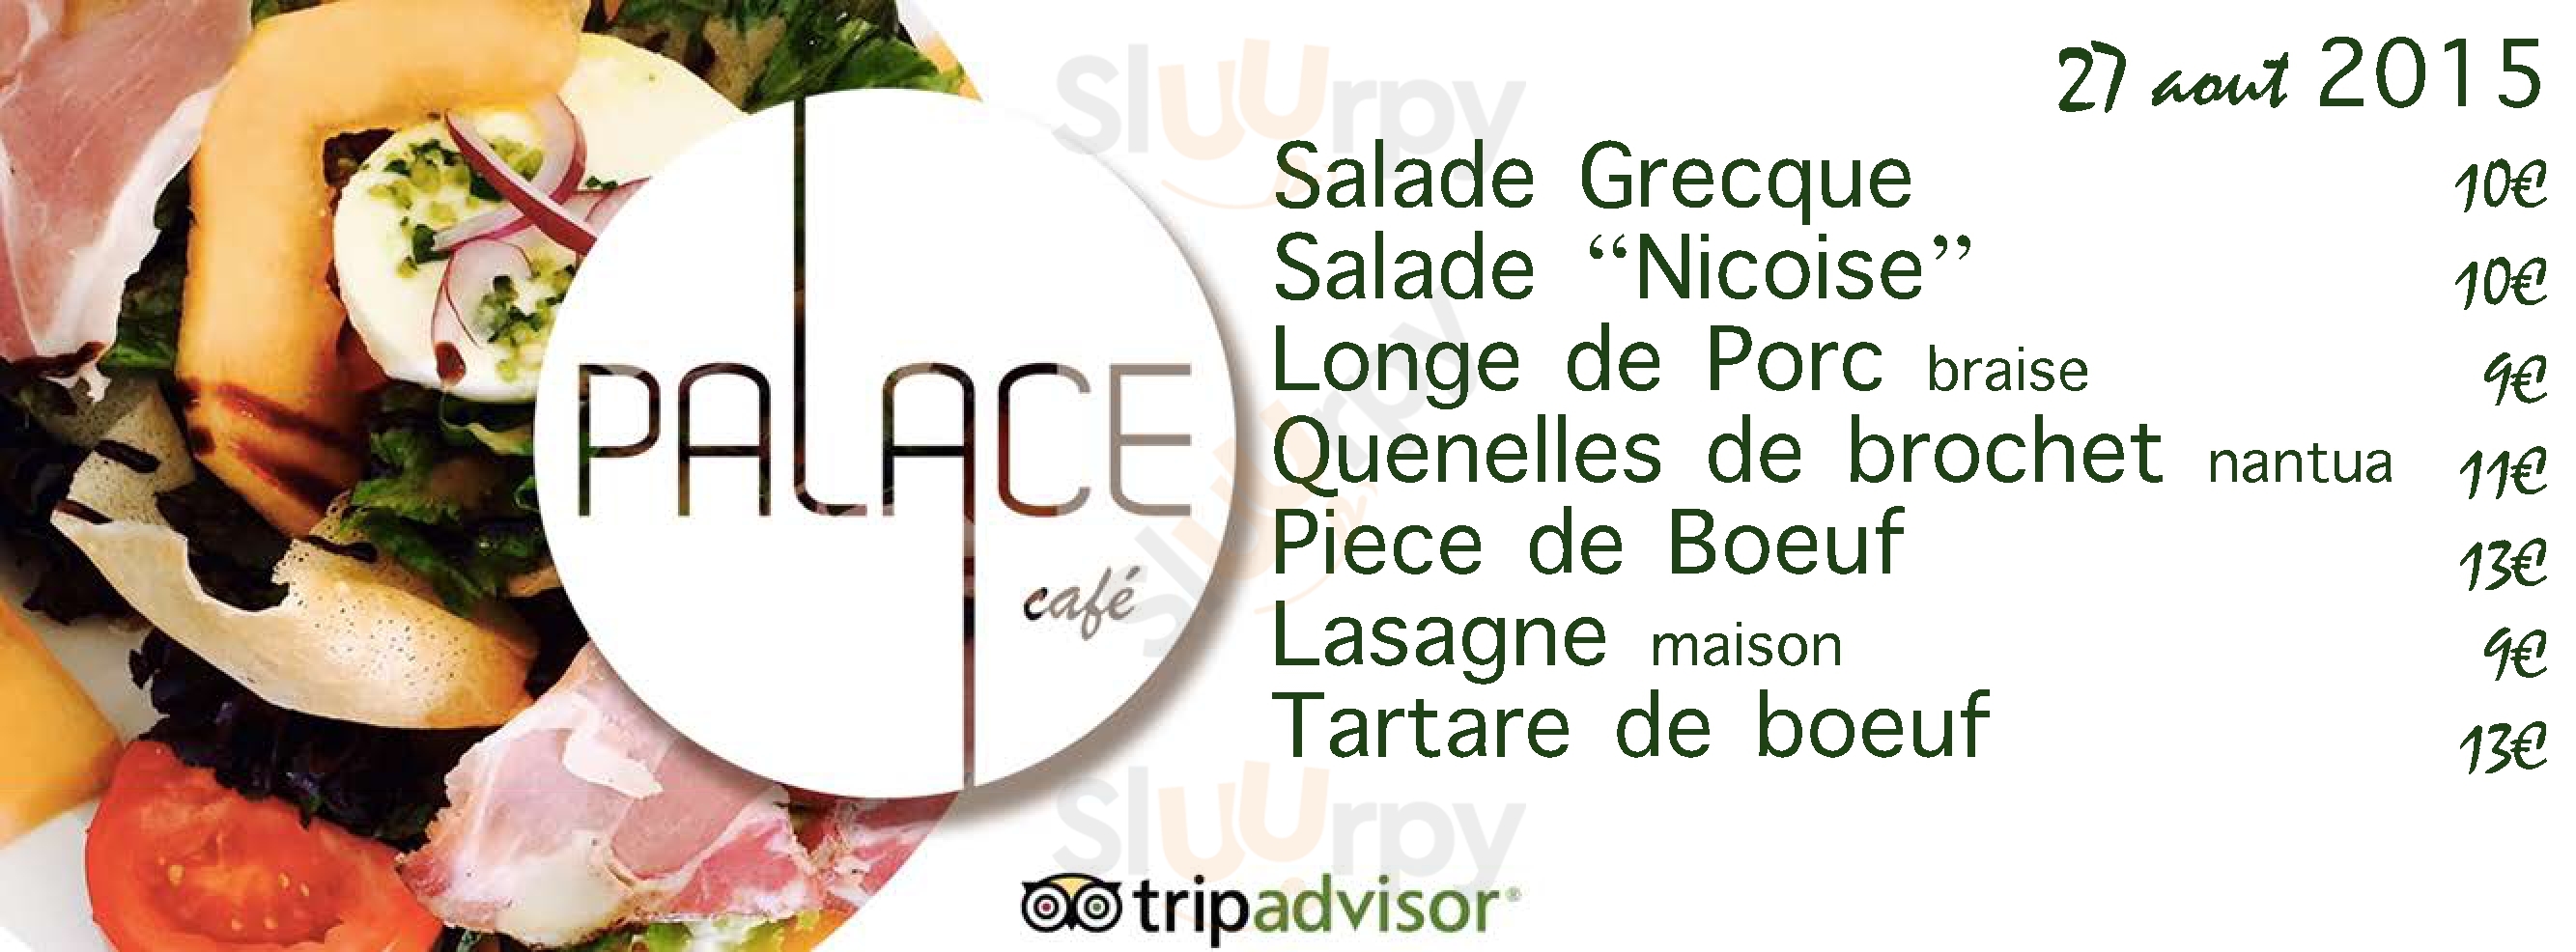 Palace Café Grenoble Menu - 1